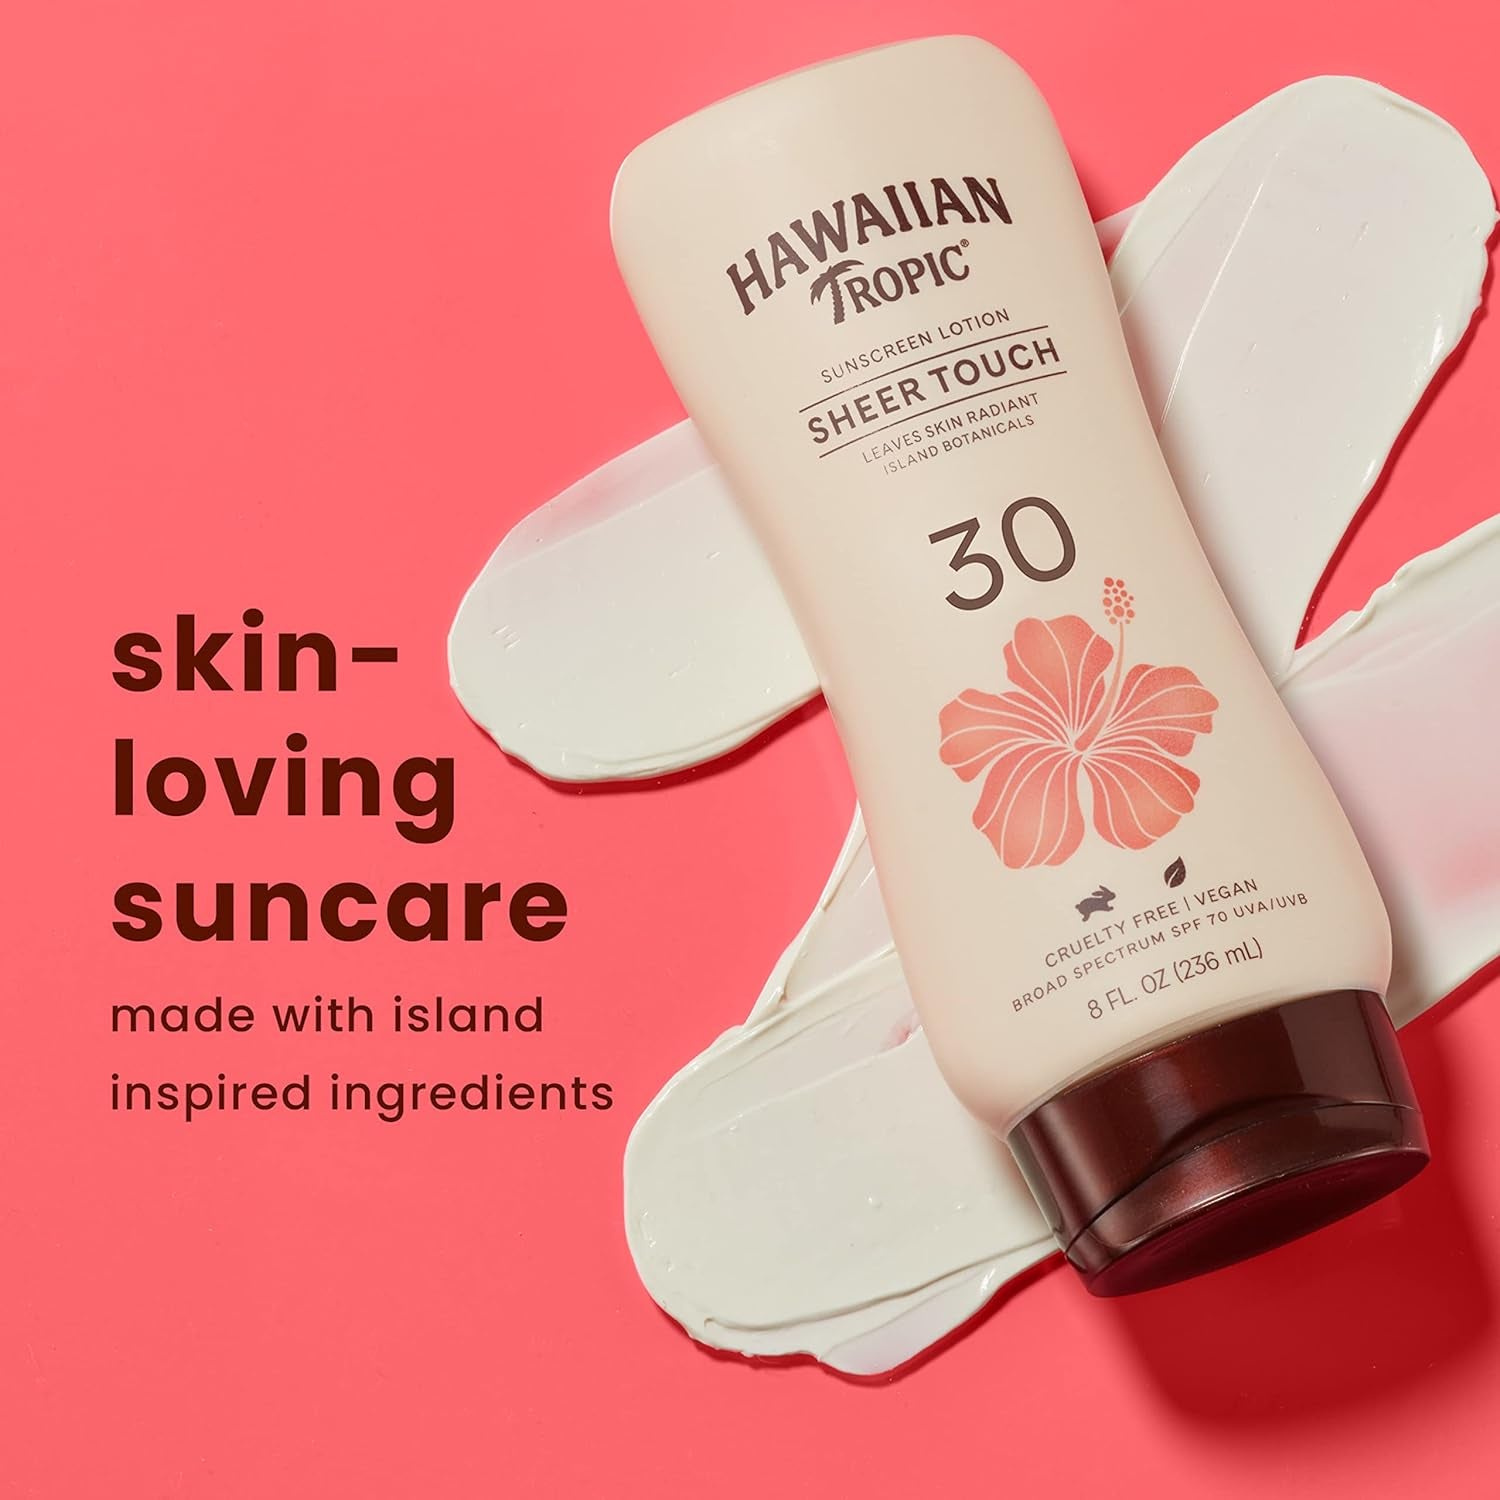 "Radiant Glow Hawaiian Tropic Sheer Touch Sunscreen SPF 30 - 8oz"